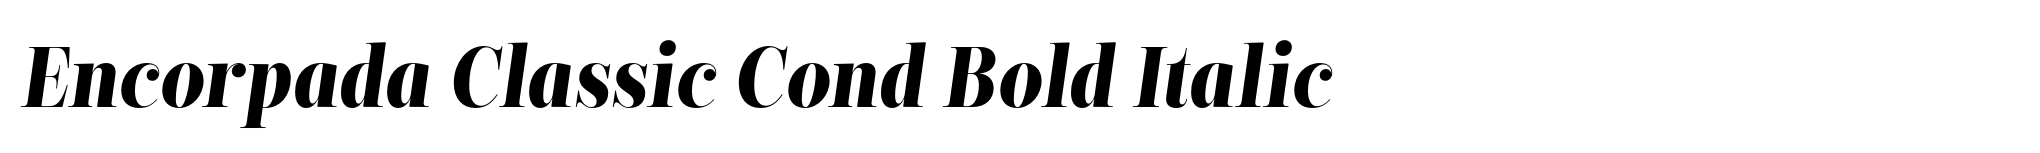 Encorpada Classic Cond Bold Italic image